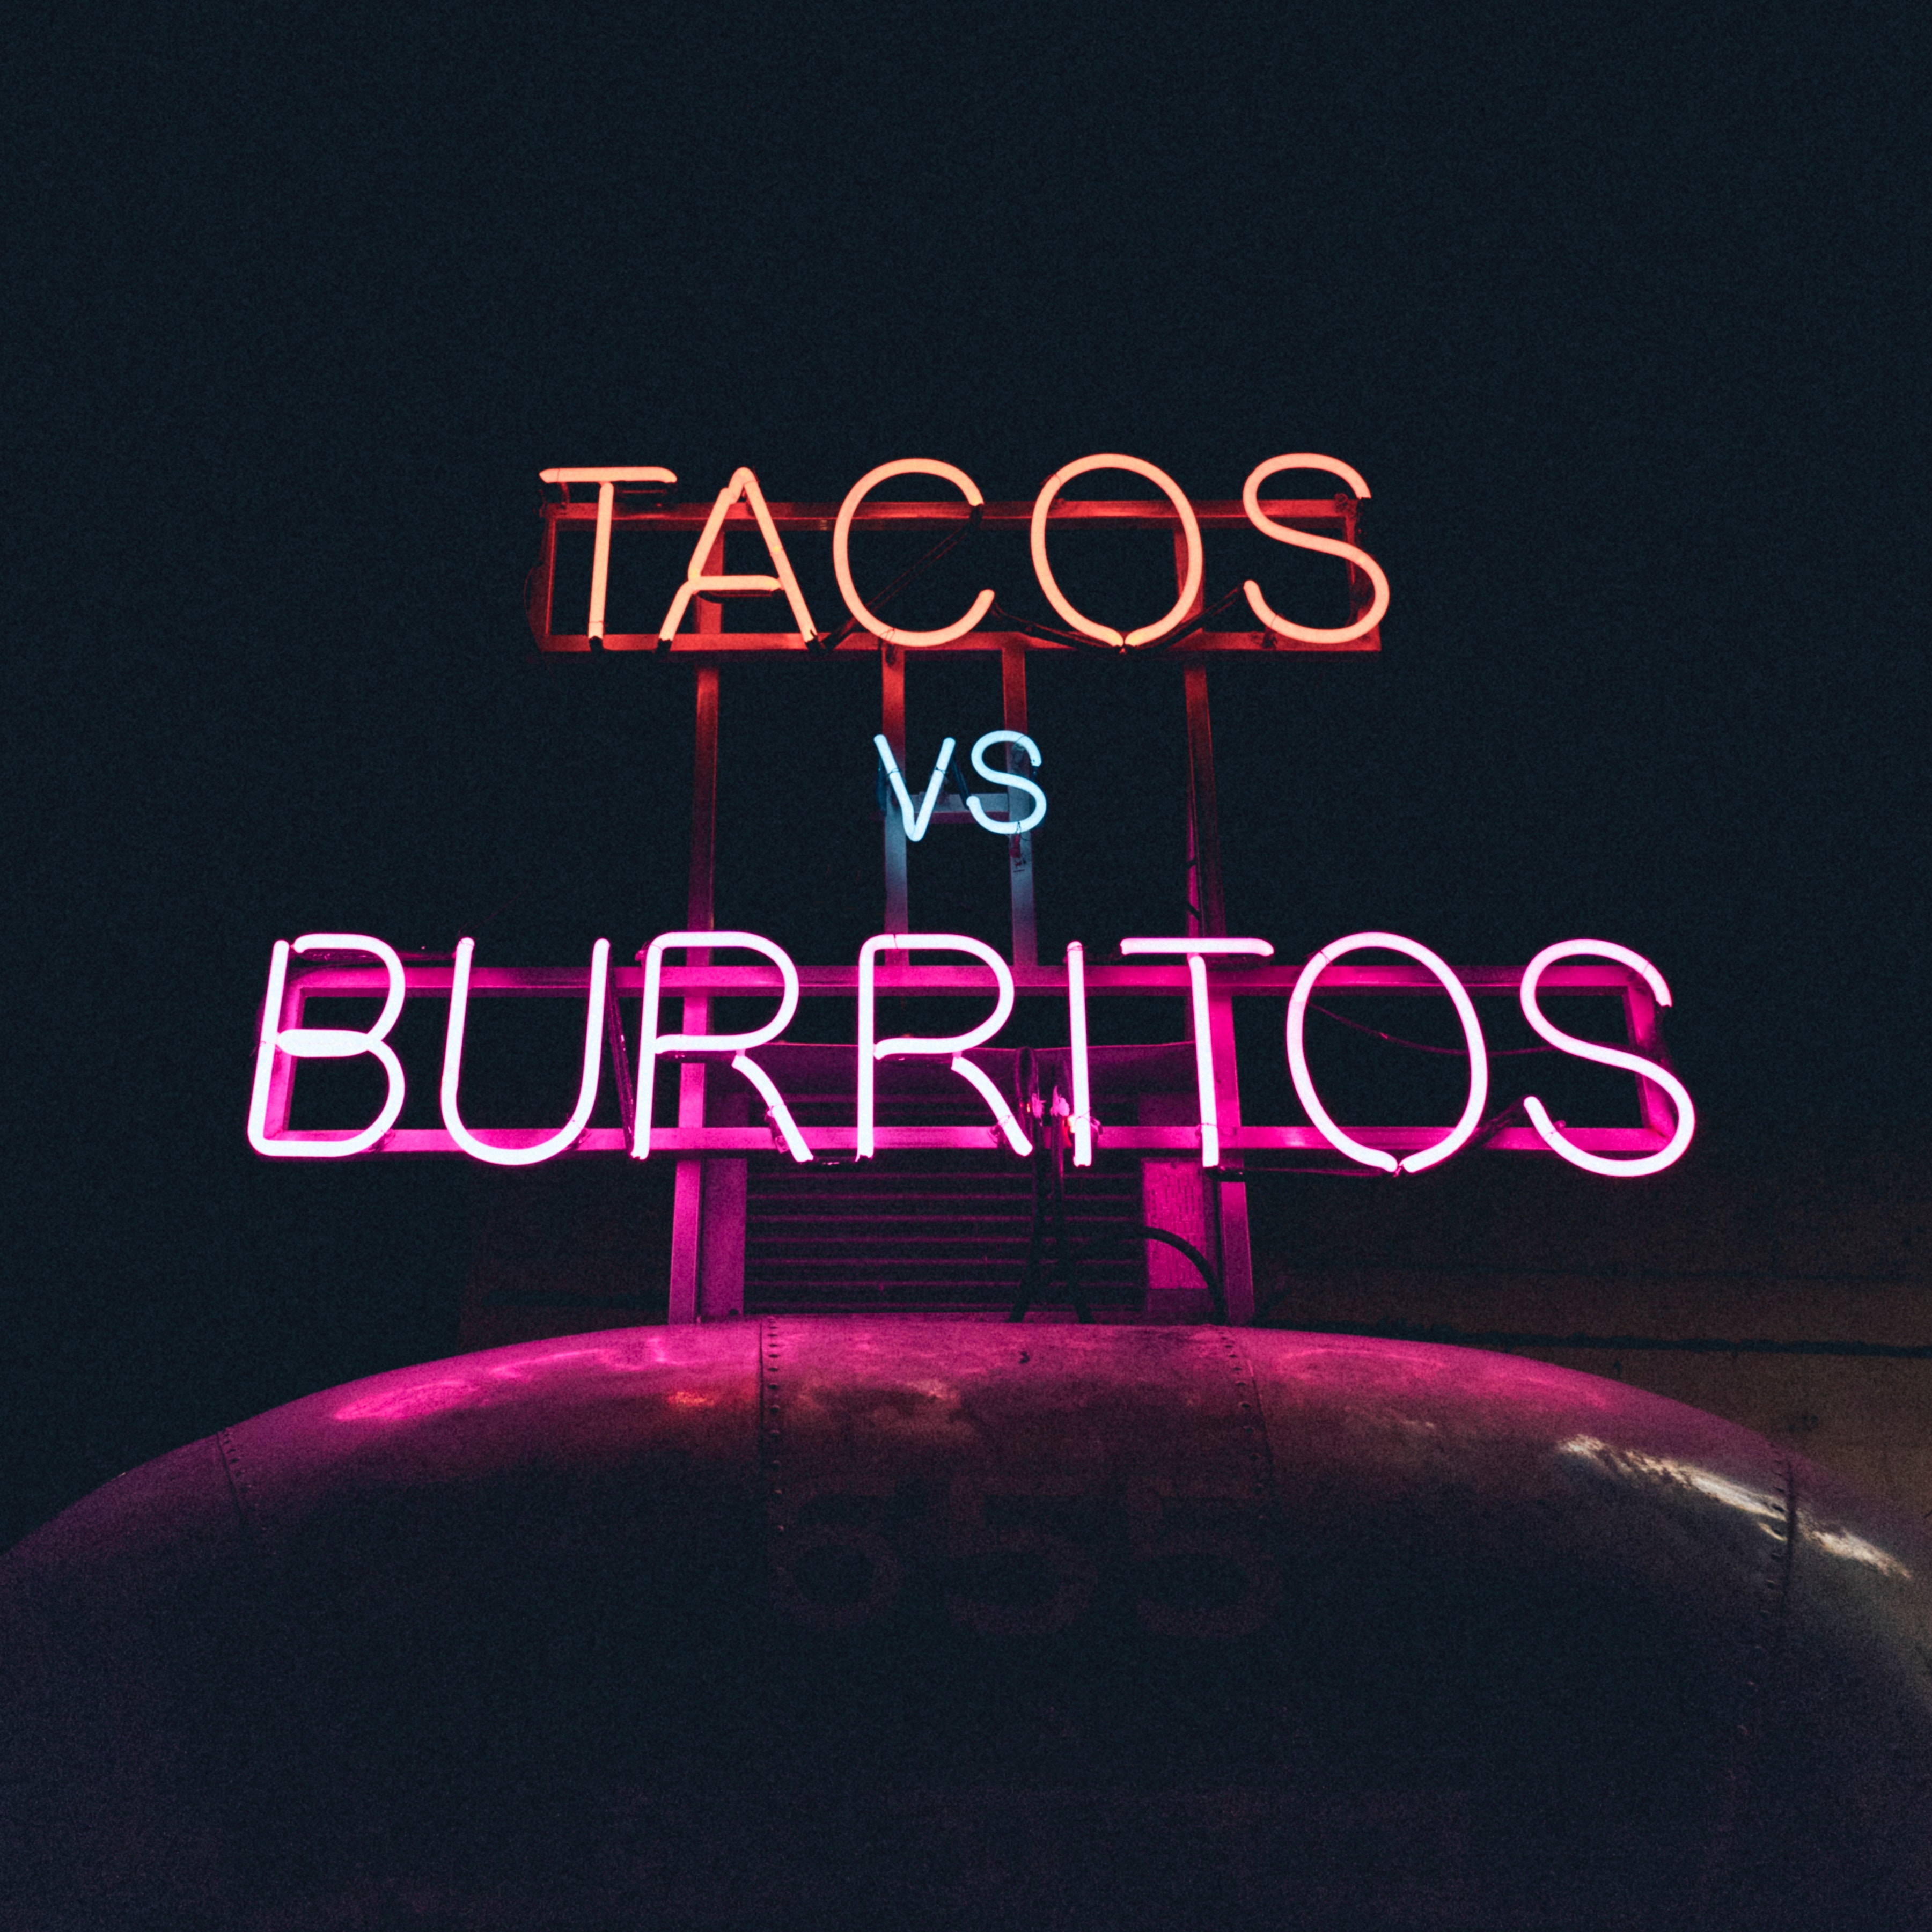 Tacos vs Burritos neon sign